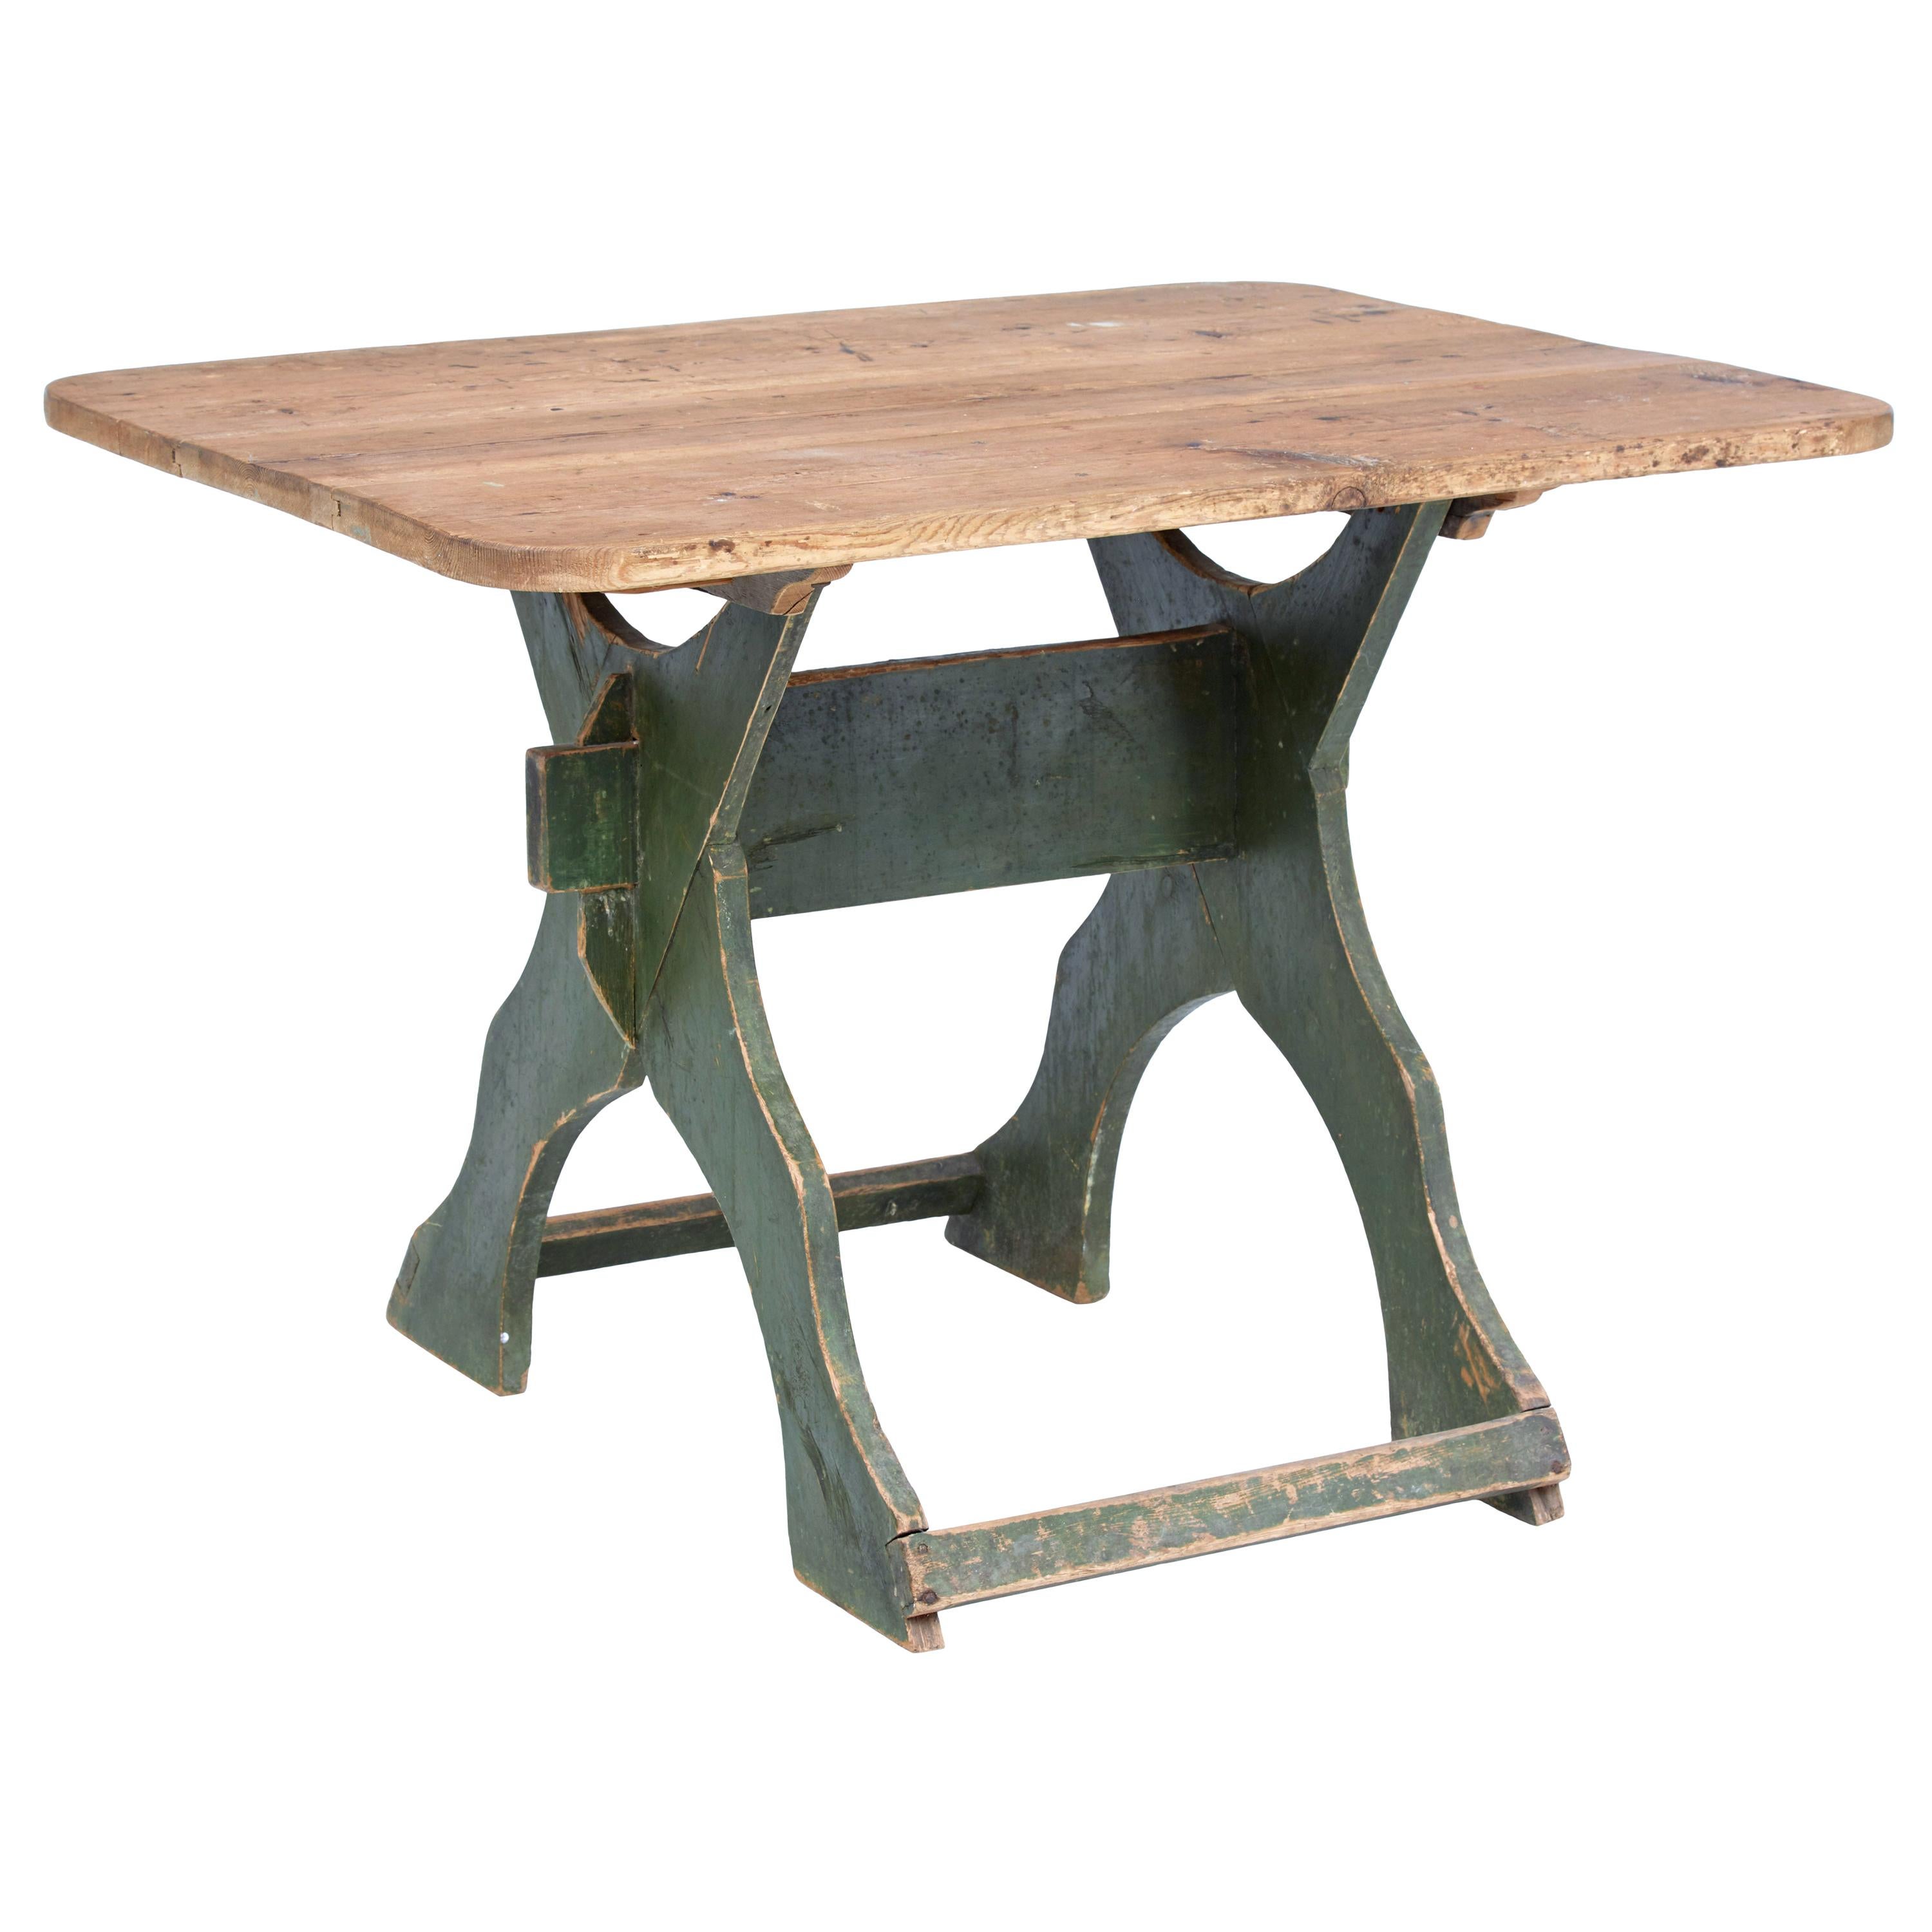 19th Century Painted Pine Swedish Trestle Table